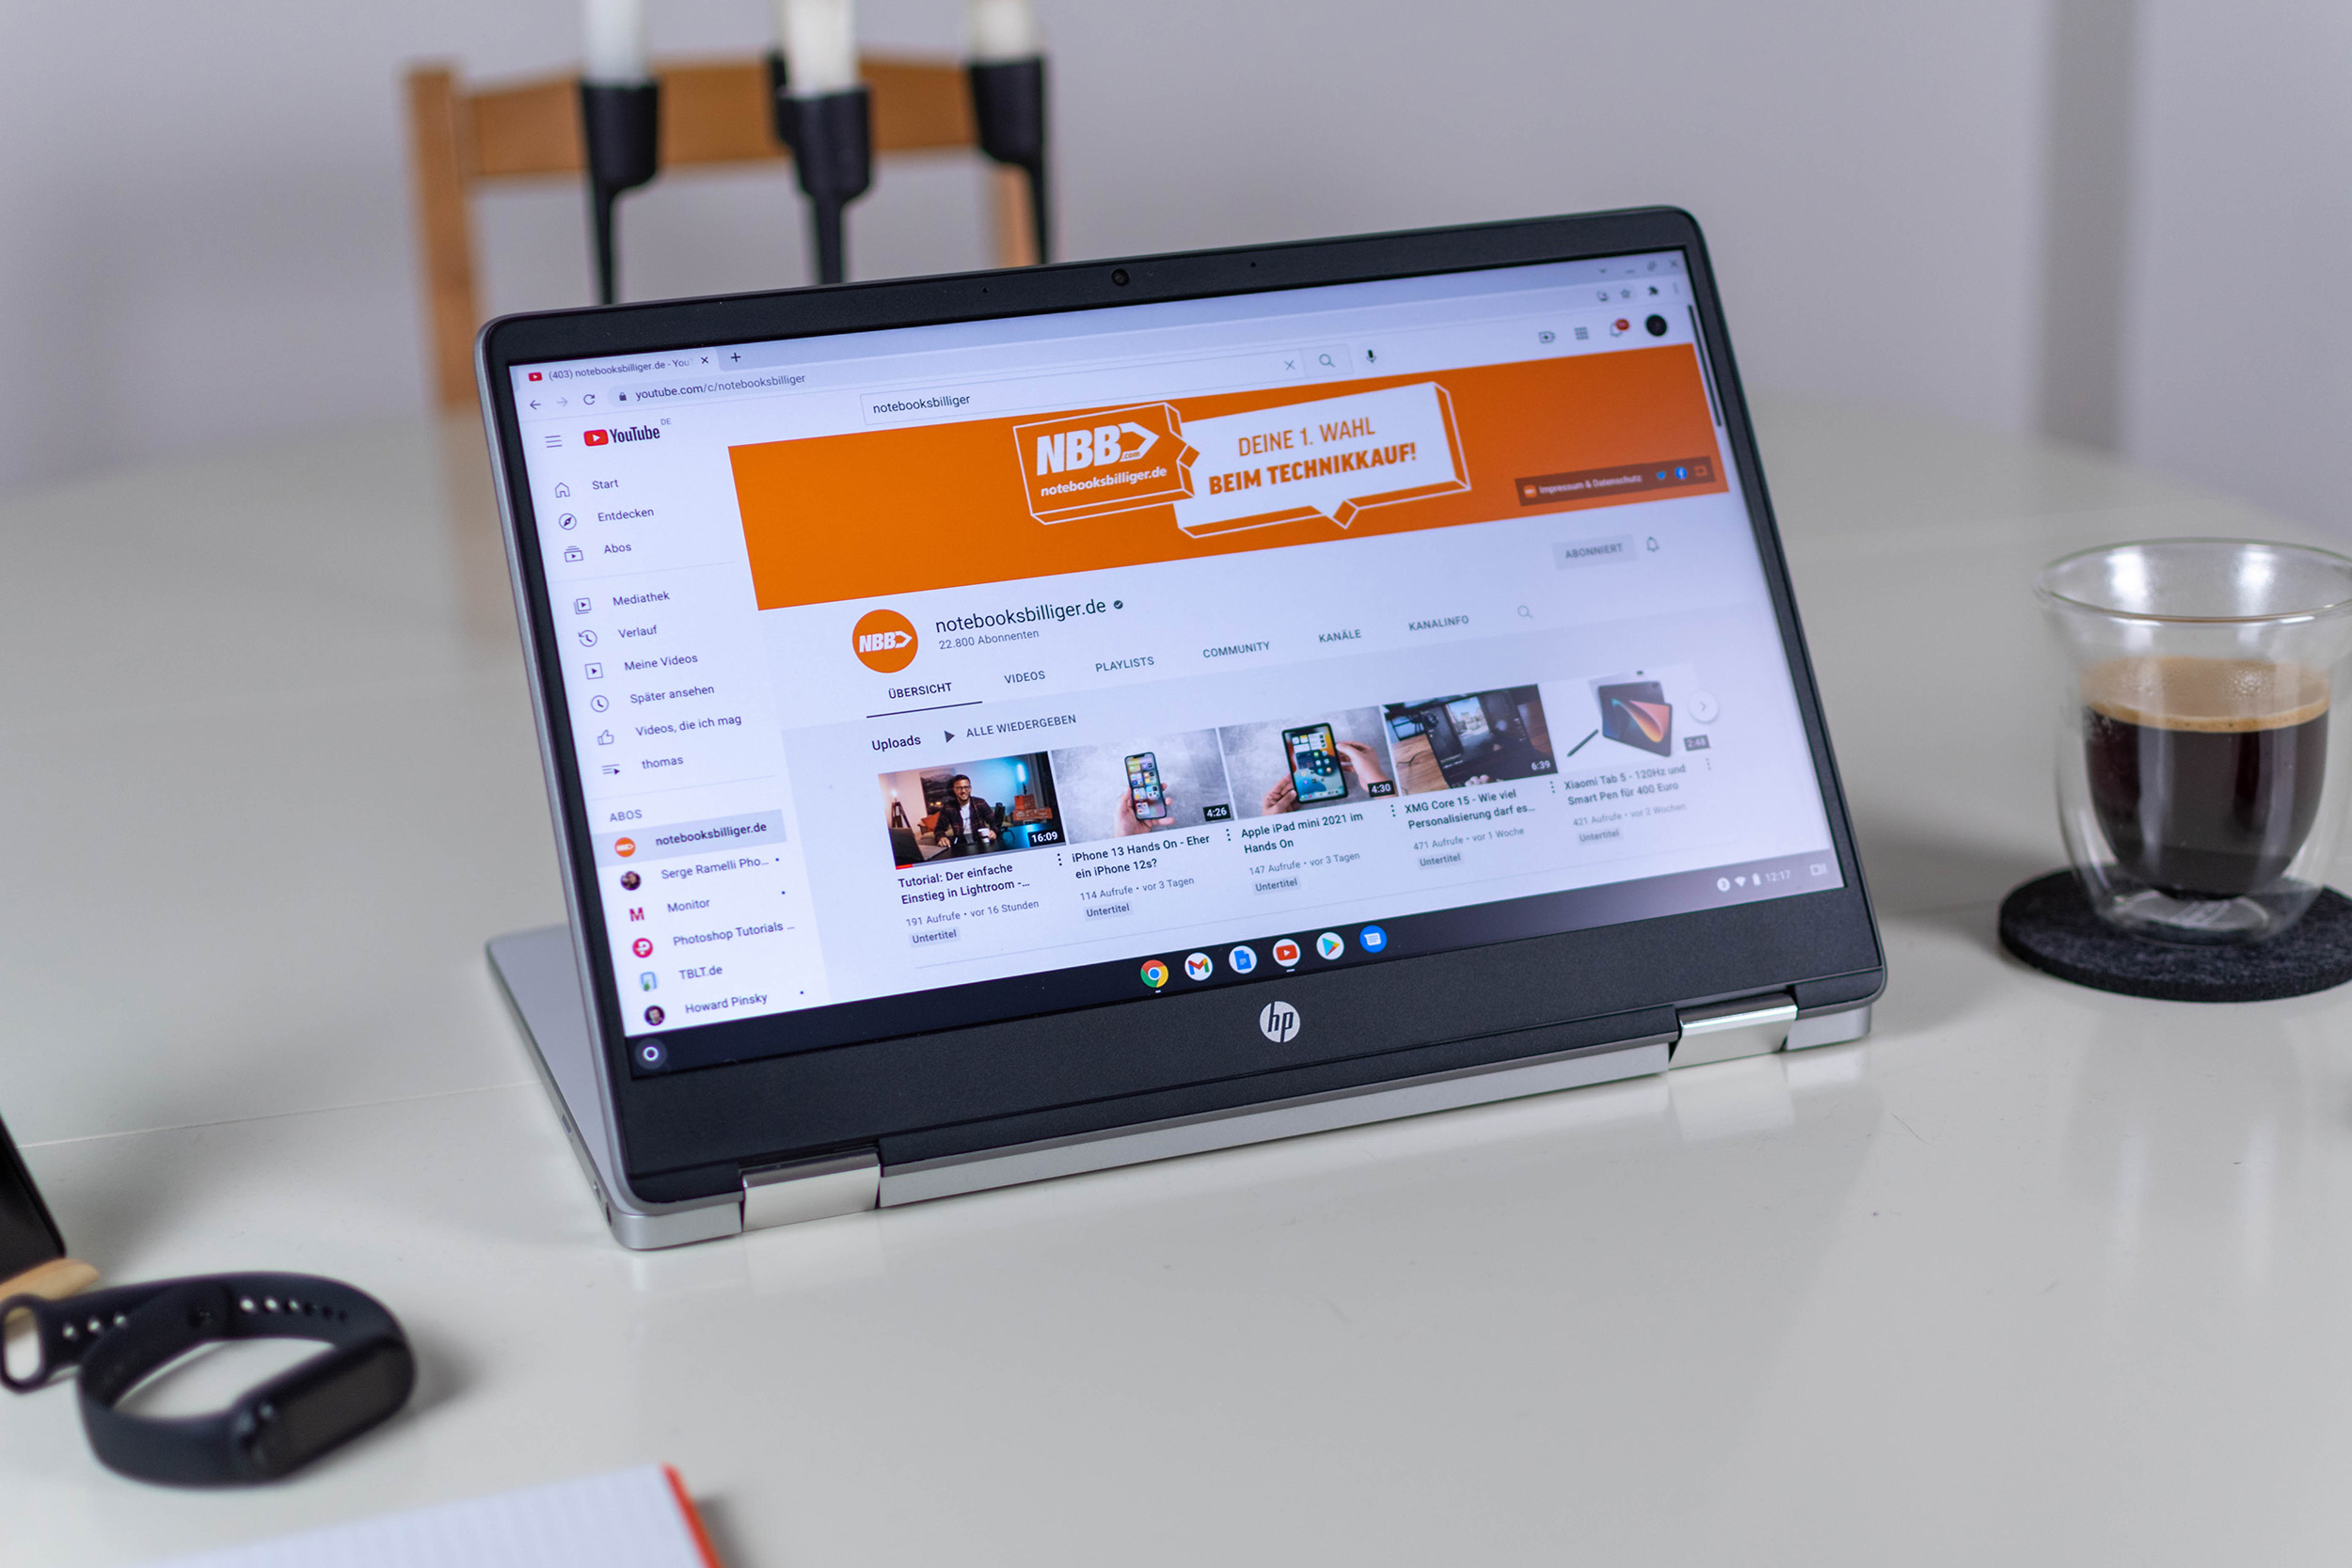 Chromebook x360 im HP 14 - Blog Allround-Convertible für Blognotebooksbilliger.de und Test: Office notebooksbilliger.de Multimedia